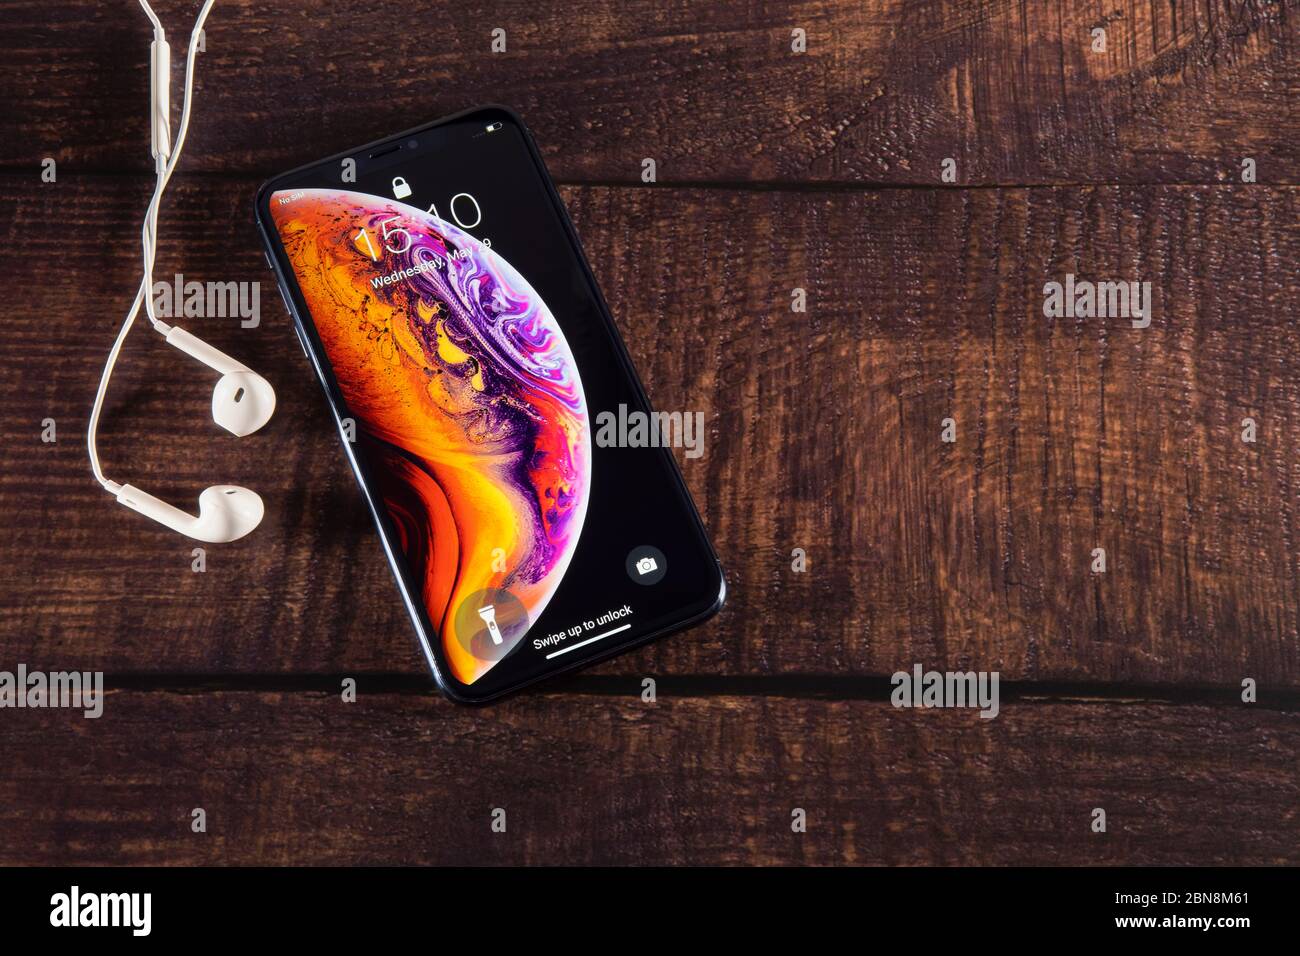 Galati, Romania - May 29, 2019: Apple launch the new smartphone iPhone XS and iPhone XS Max. iPhone Xs Max with headphones on wooden table. Stock Photo